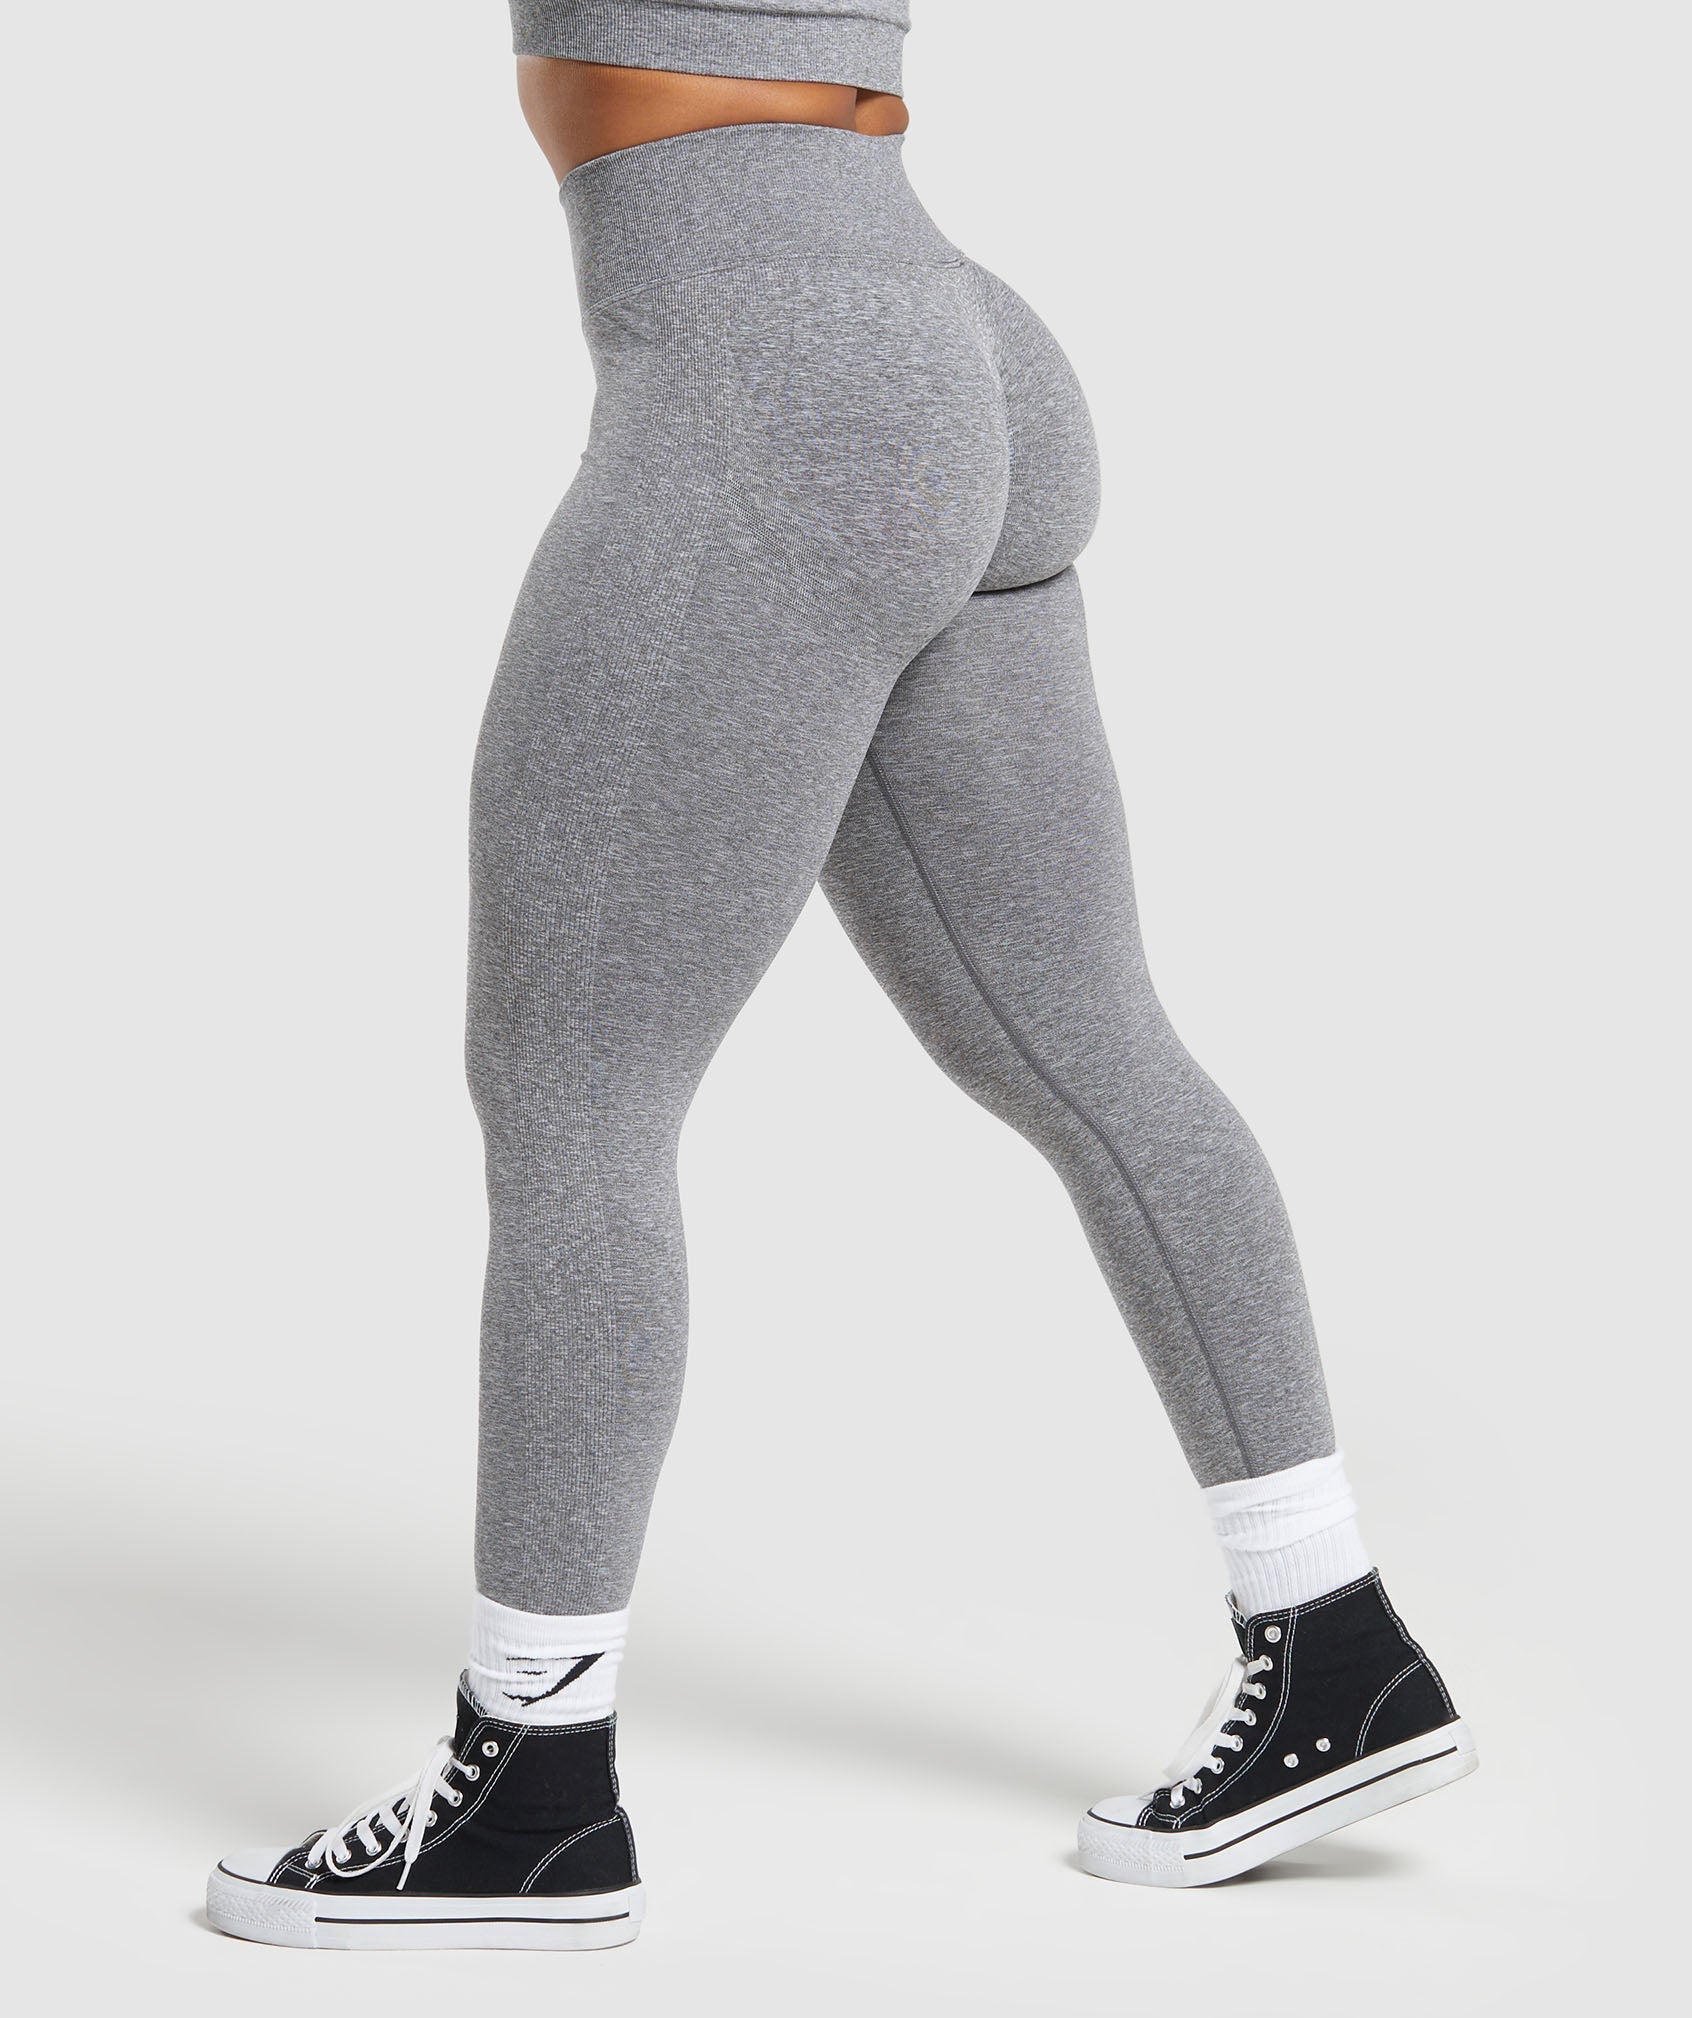 Gymshark Asymmetrical Gray Black Leggings S Small Booty Contour Colorblock  Pants